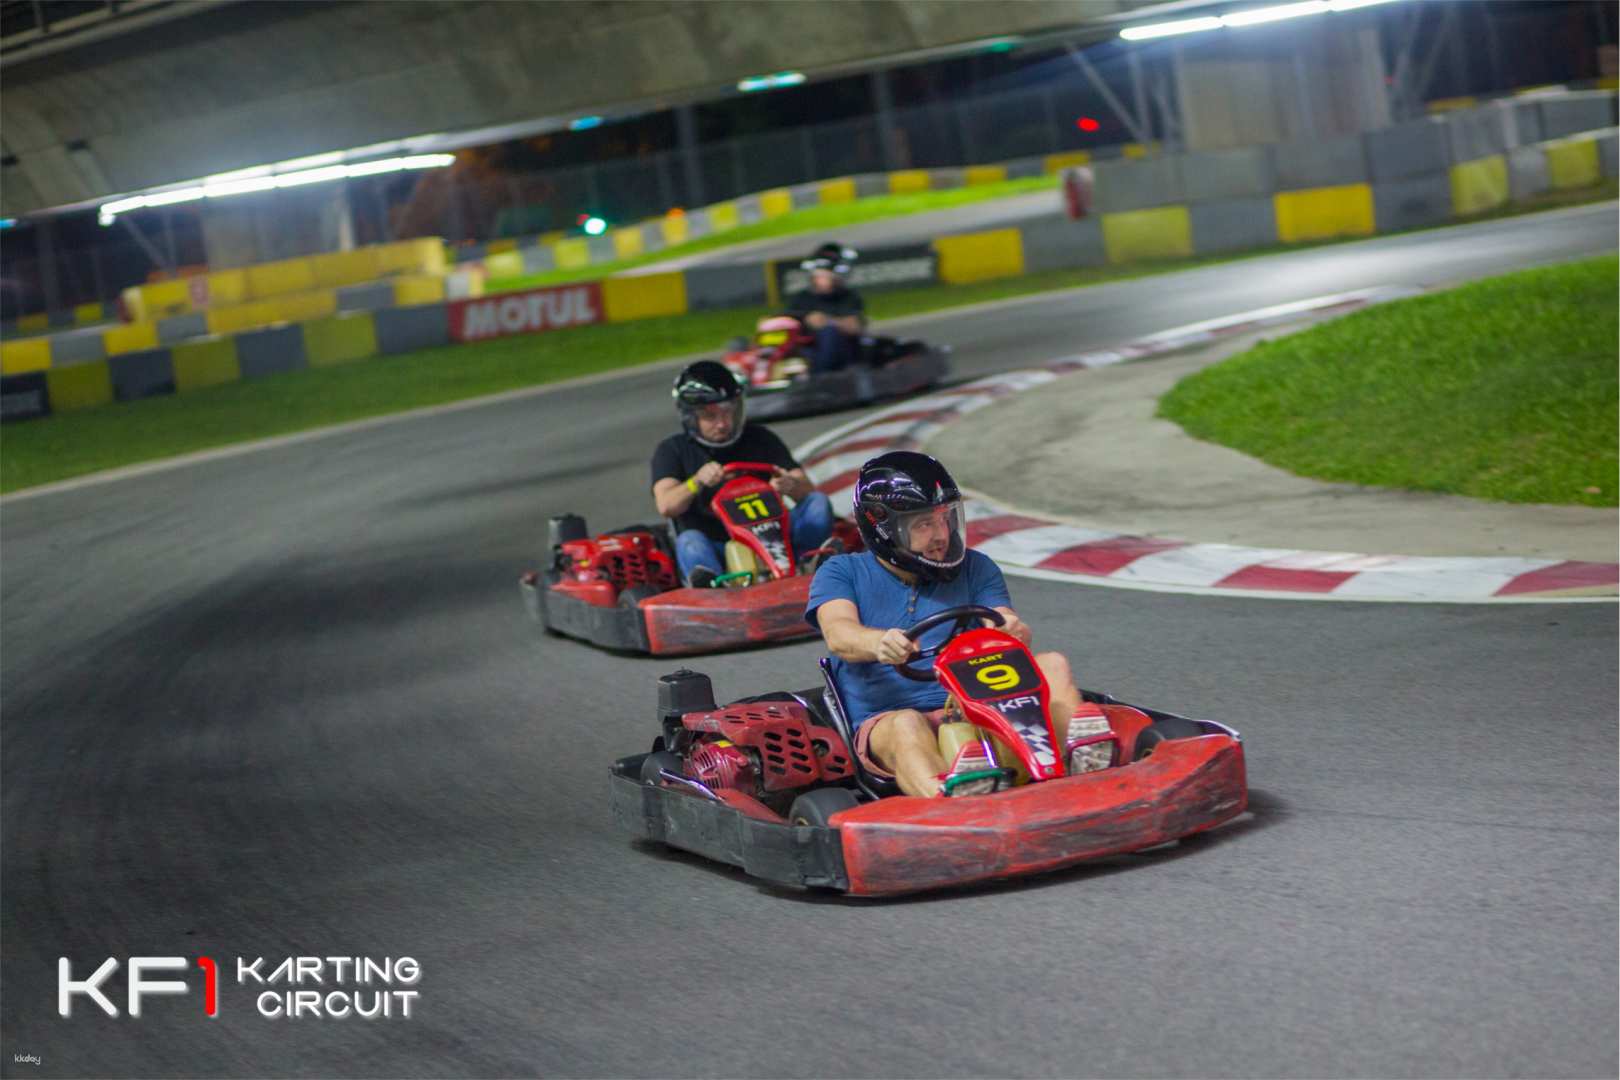 Kranji Fun Kart Experience At KF1 Karting Circuit